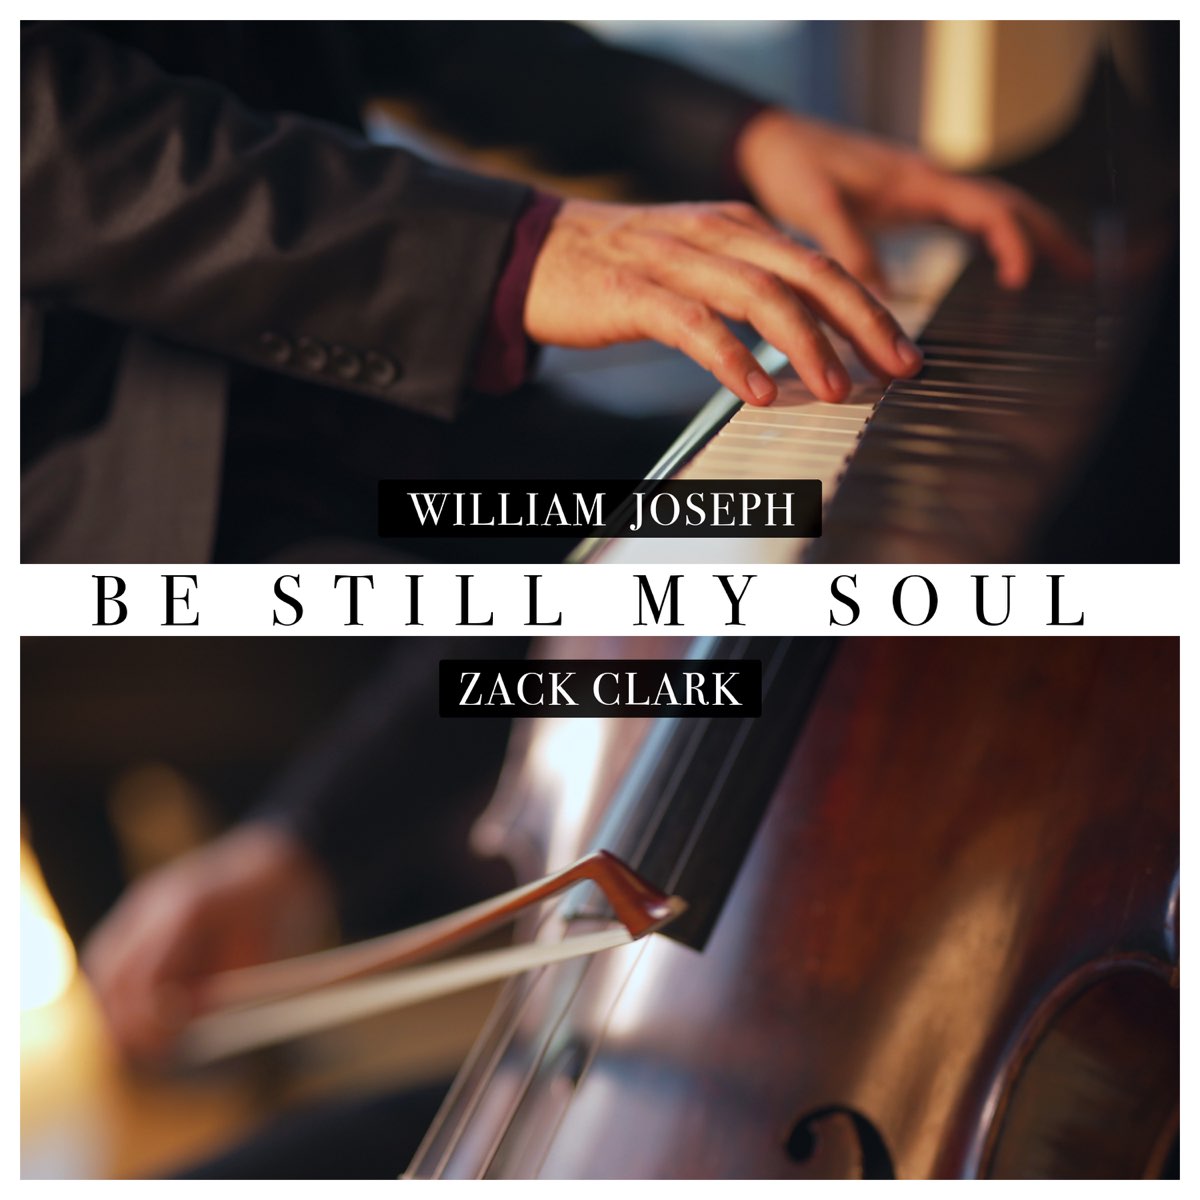 Be Still My Soul - Single by William Joseph & Zack Clark on Apple Music